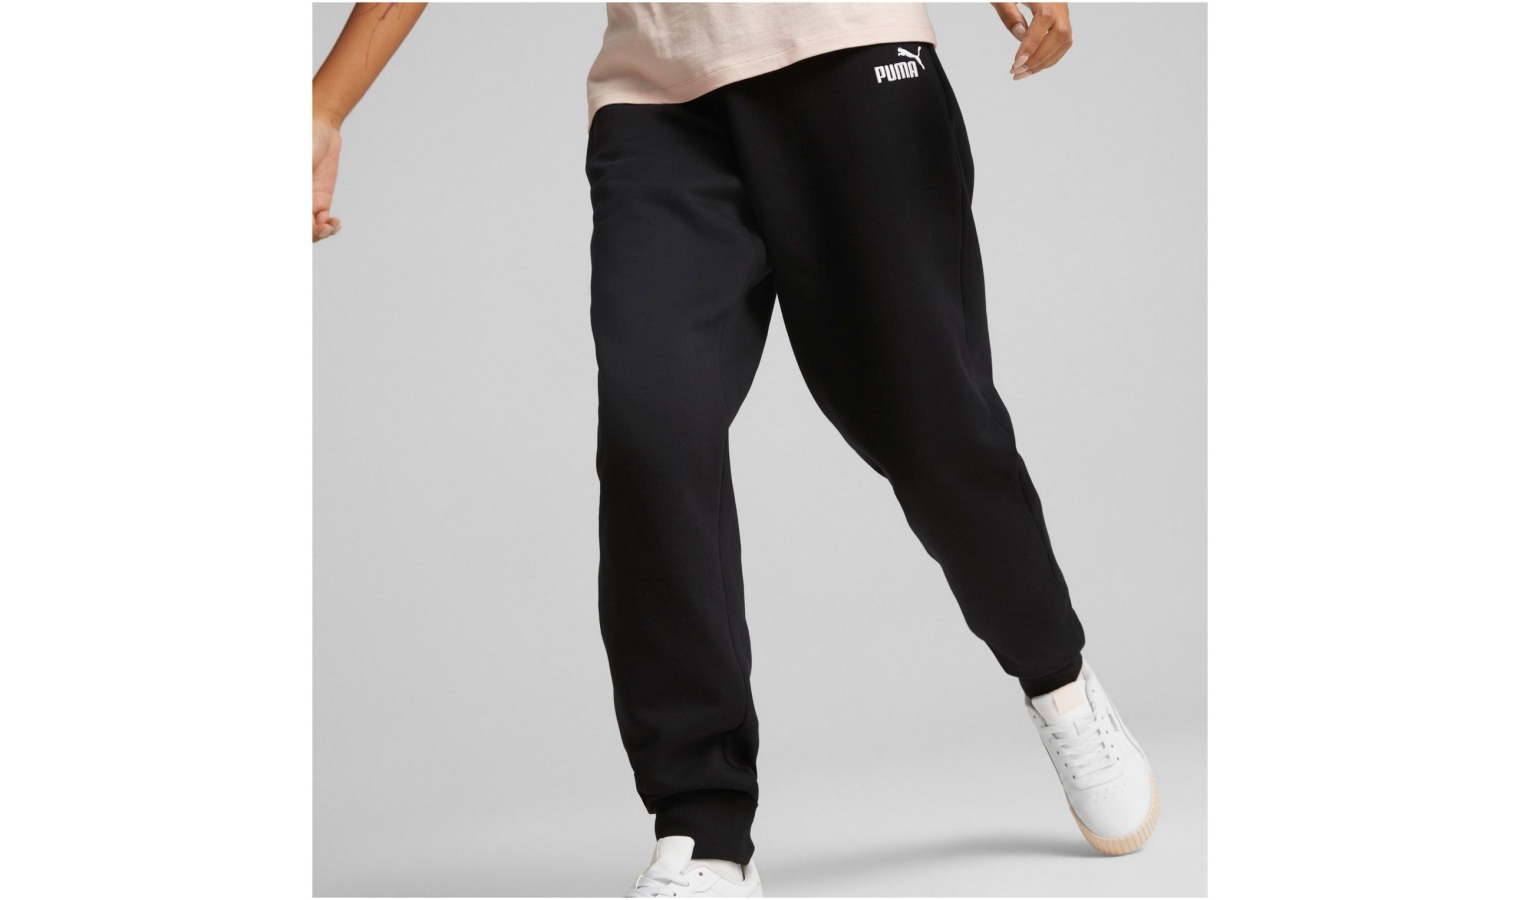 Adidas Black Noir Pants Pantalon